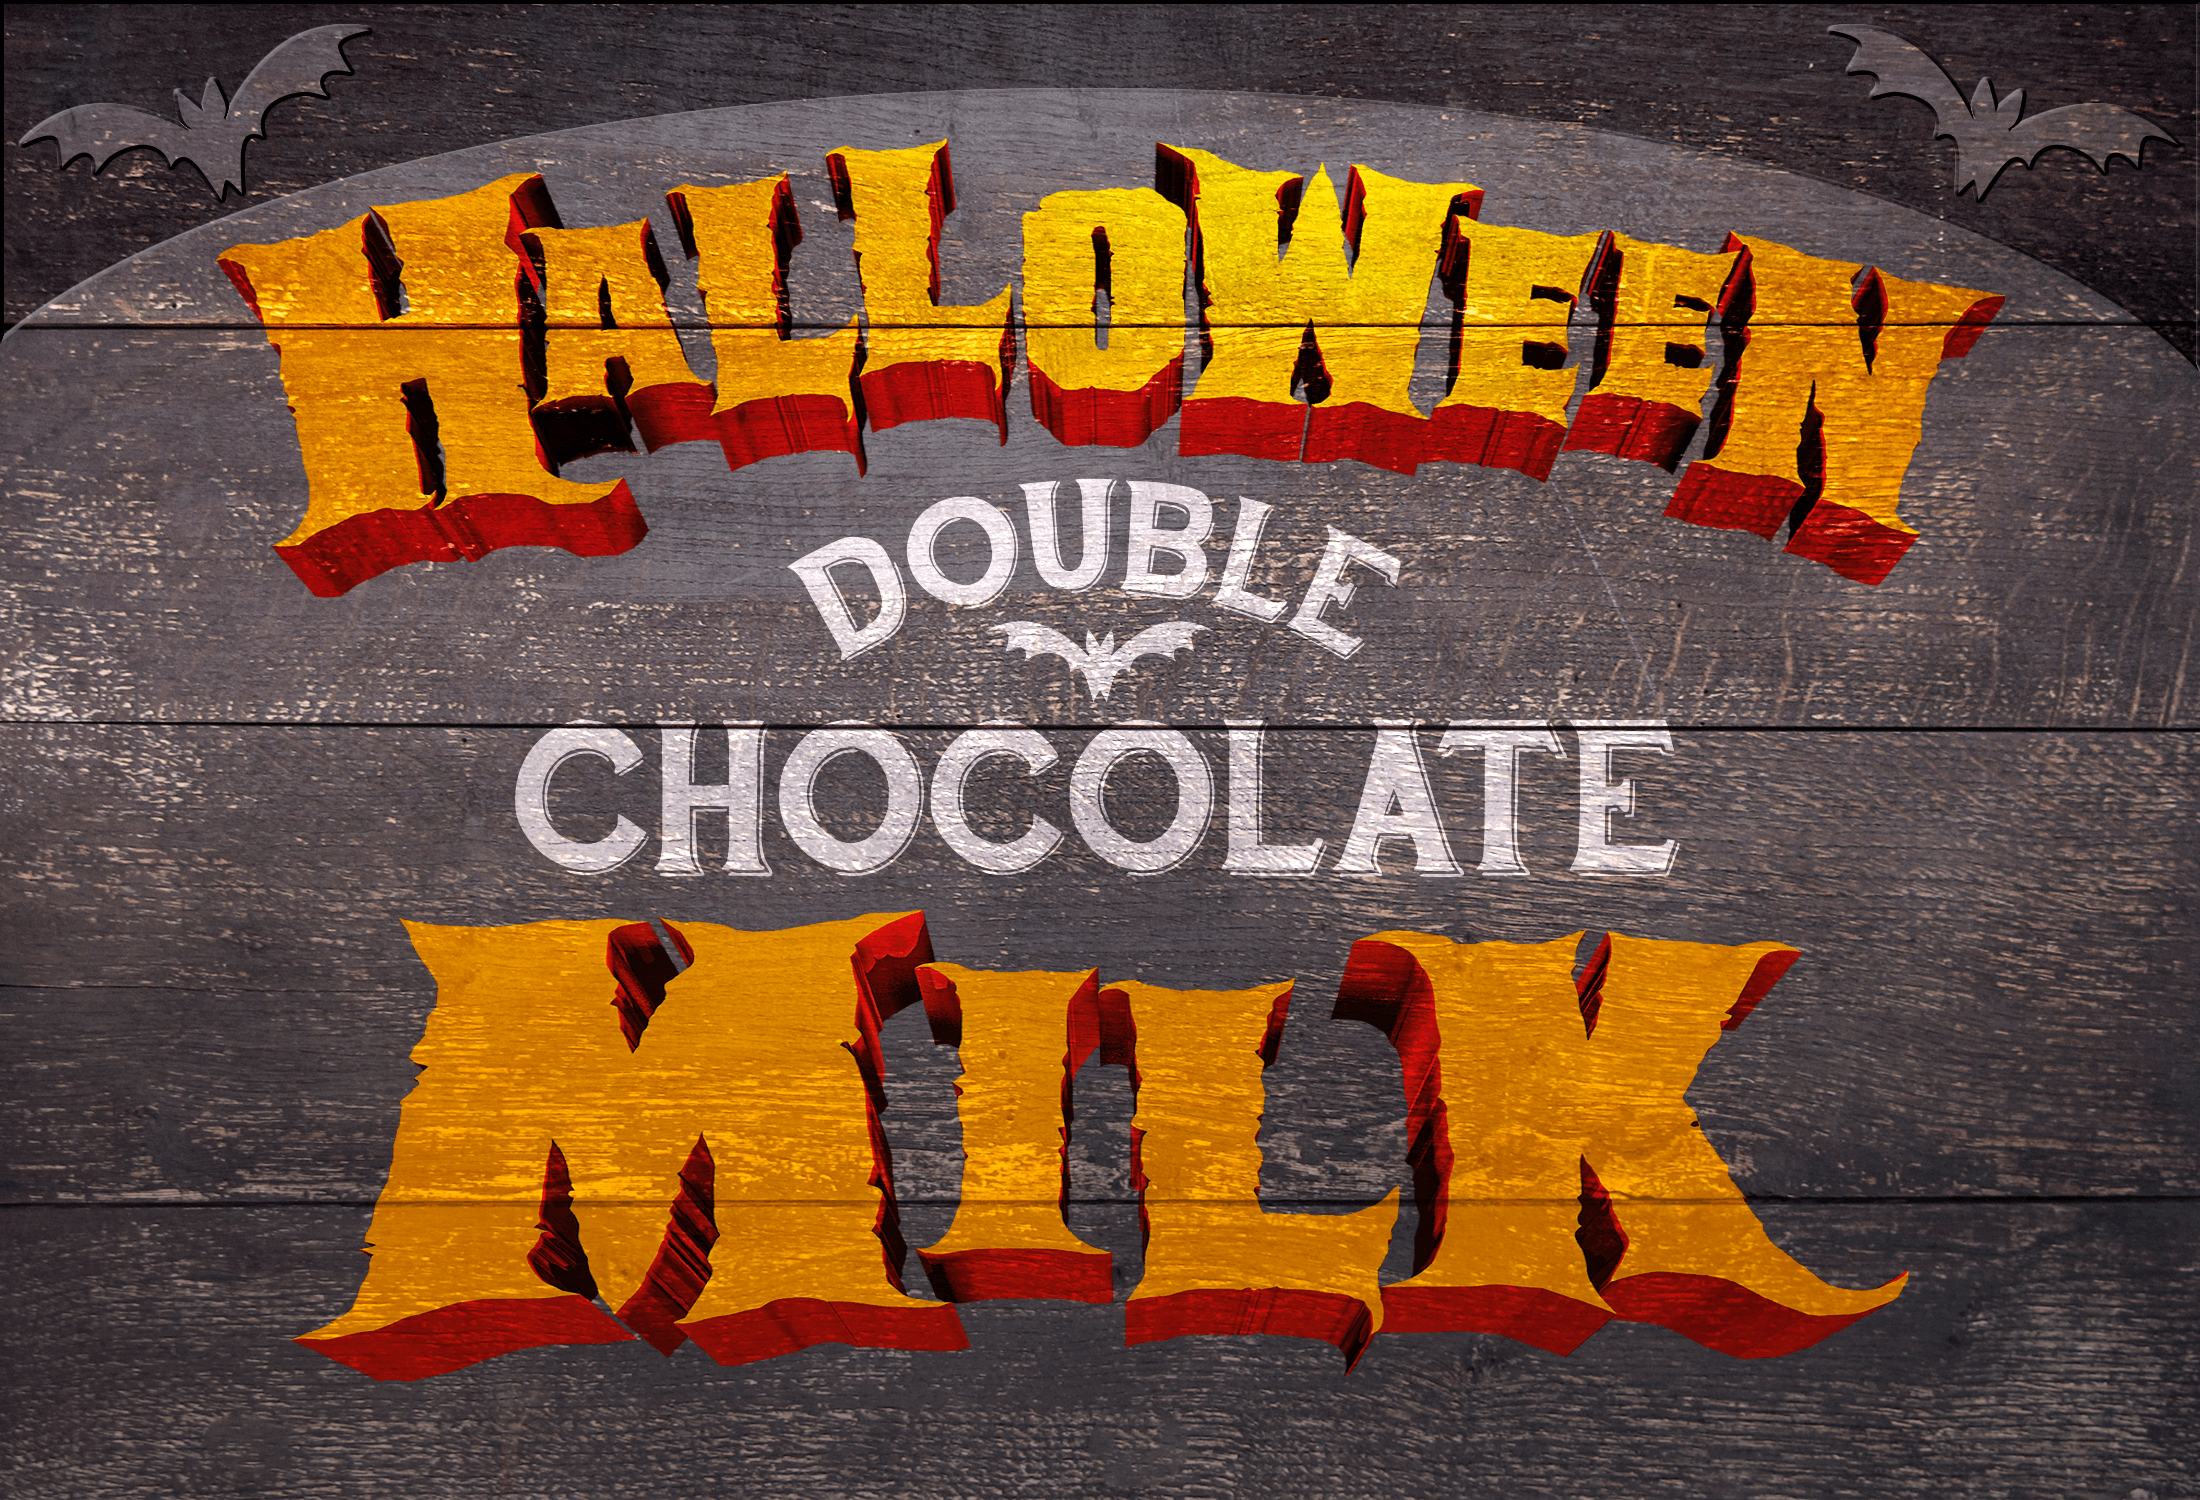 Dark wood sign that says, "Halloween Double chocolate Milk"